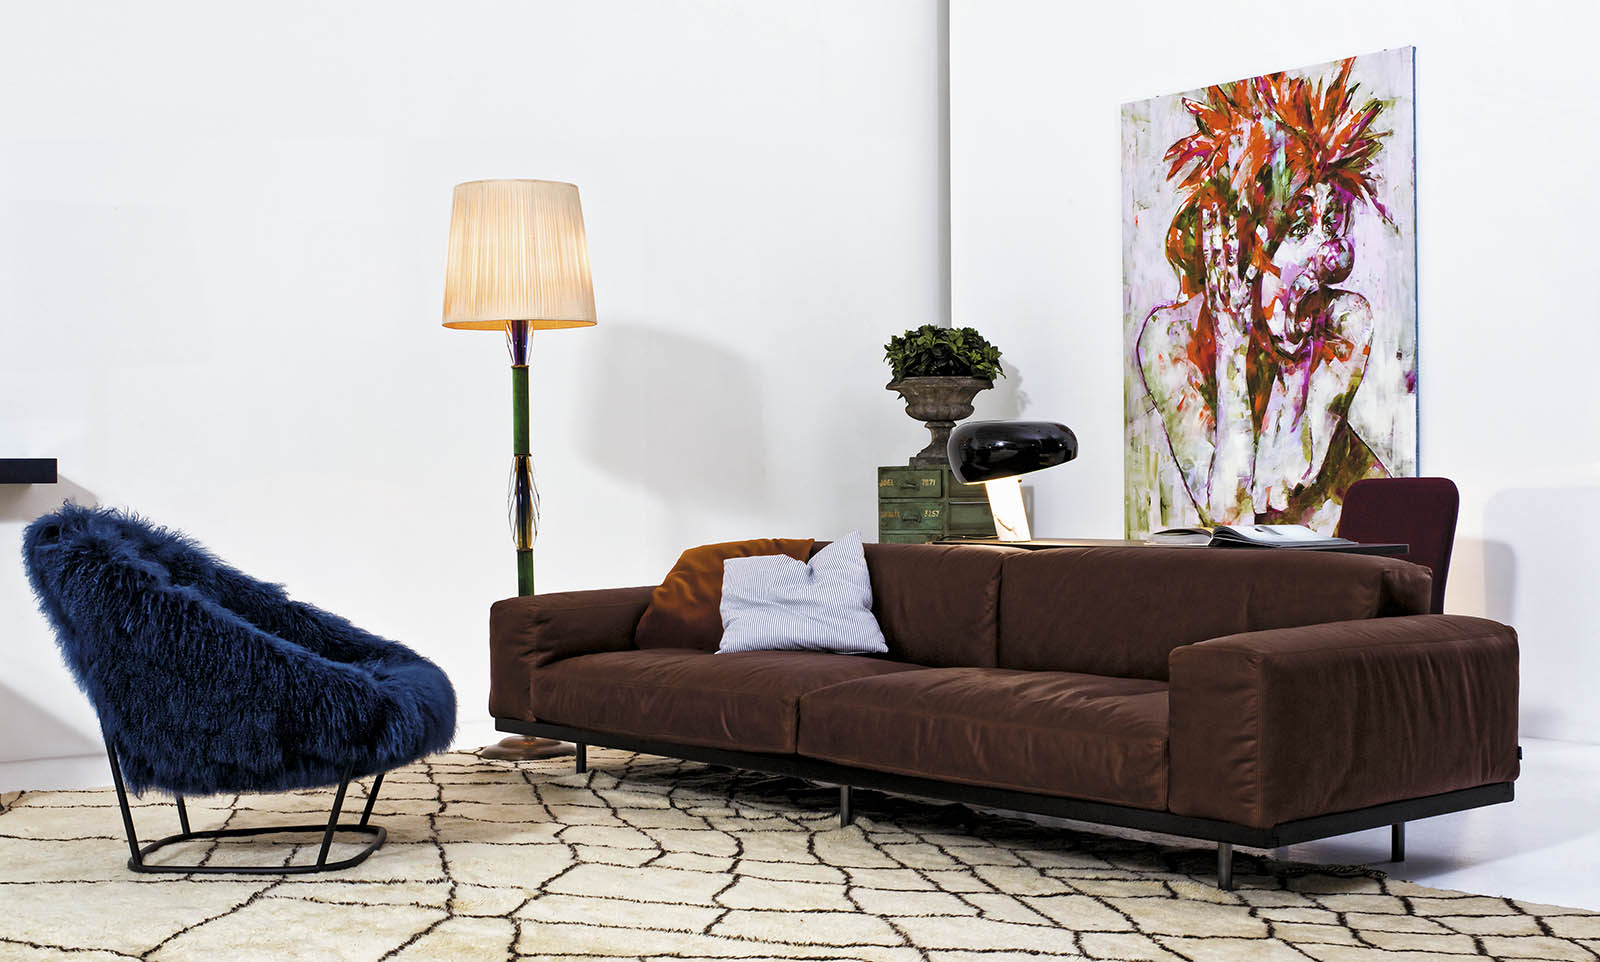 arflex-Katrin-扶手椅-设计-Carlo-Colombo-毛皮-靠背-高-居住-招待-项目-豪华-意大利制造-可移除-现代-当代